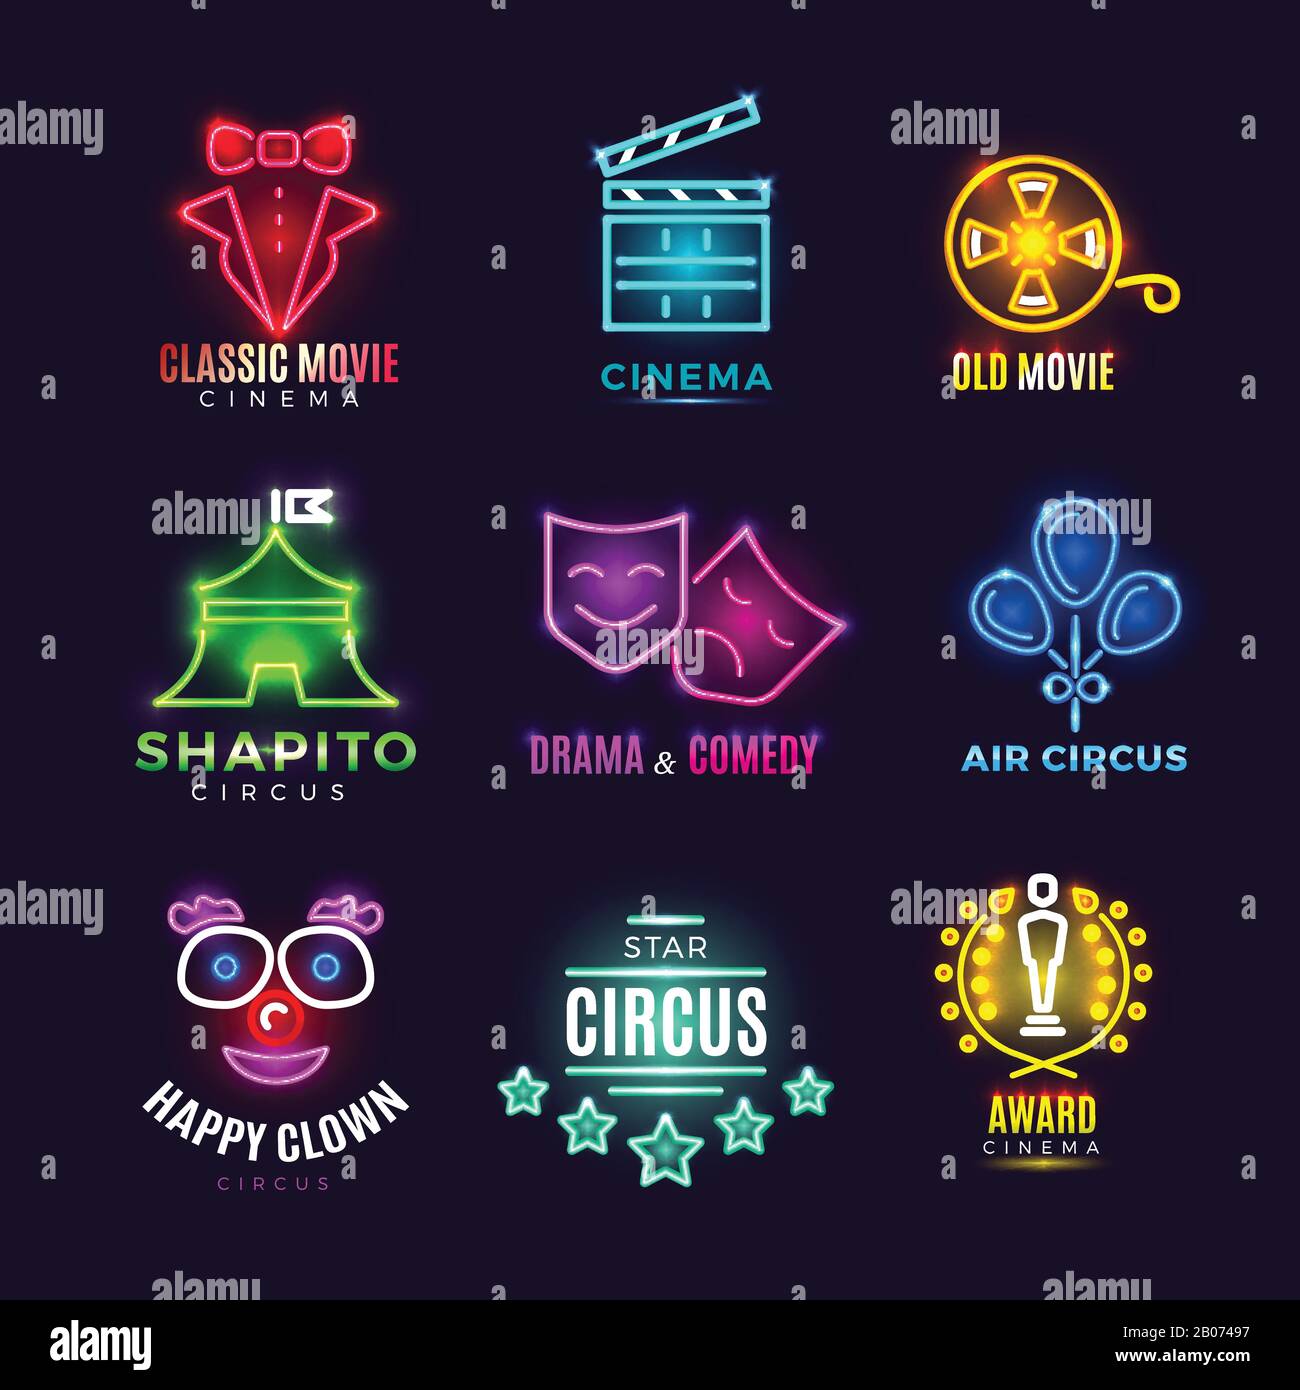 Neon circus, cinema, movie vector vintage labels. Entertainment film and award cinema illustration Stock Vector